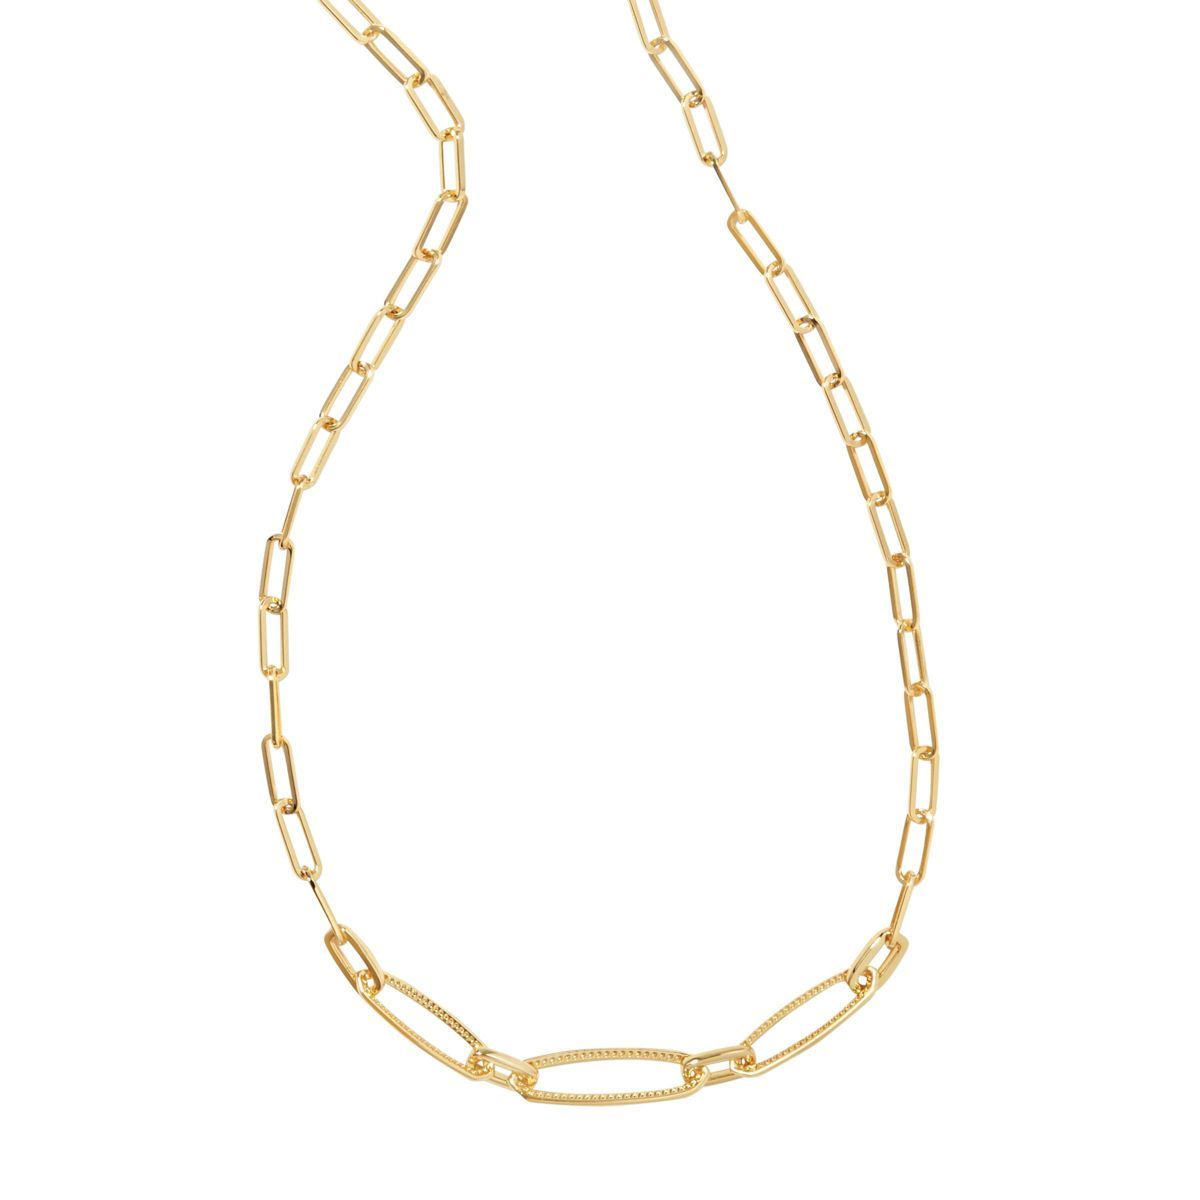 Kendra Scott Etta 14K Gold Over Brass Chain Necklace - Gold | Target